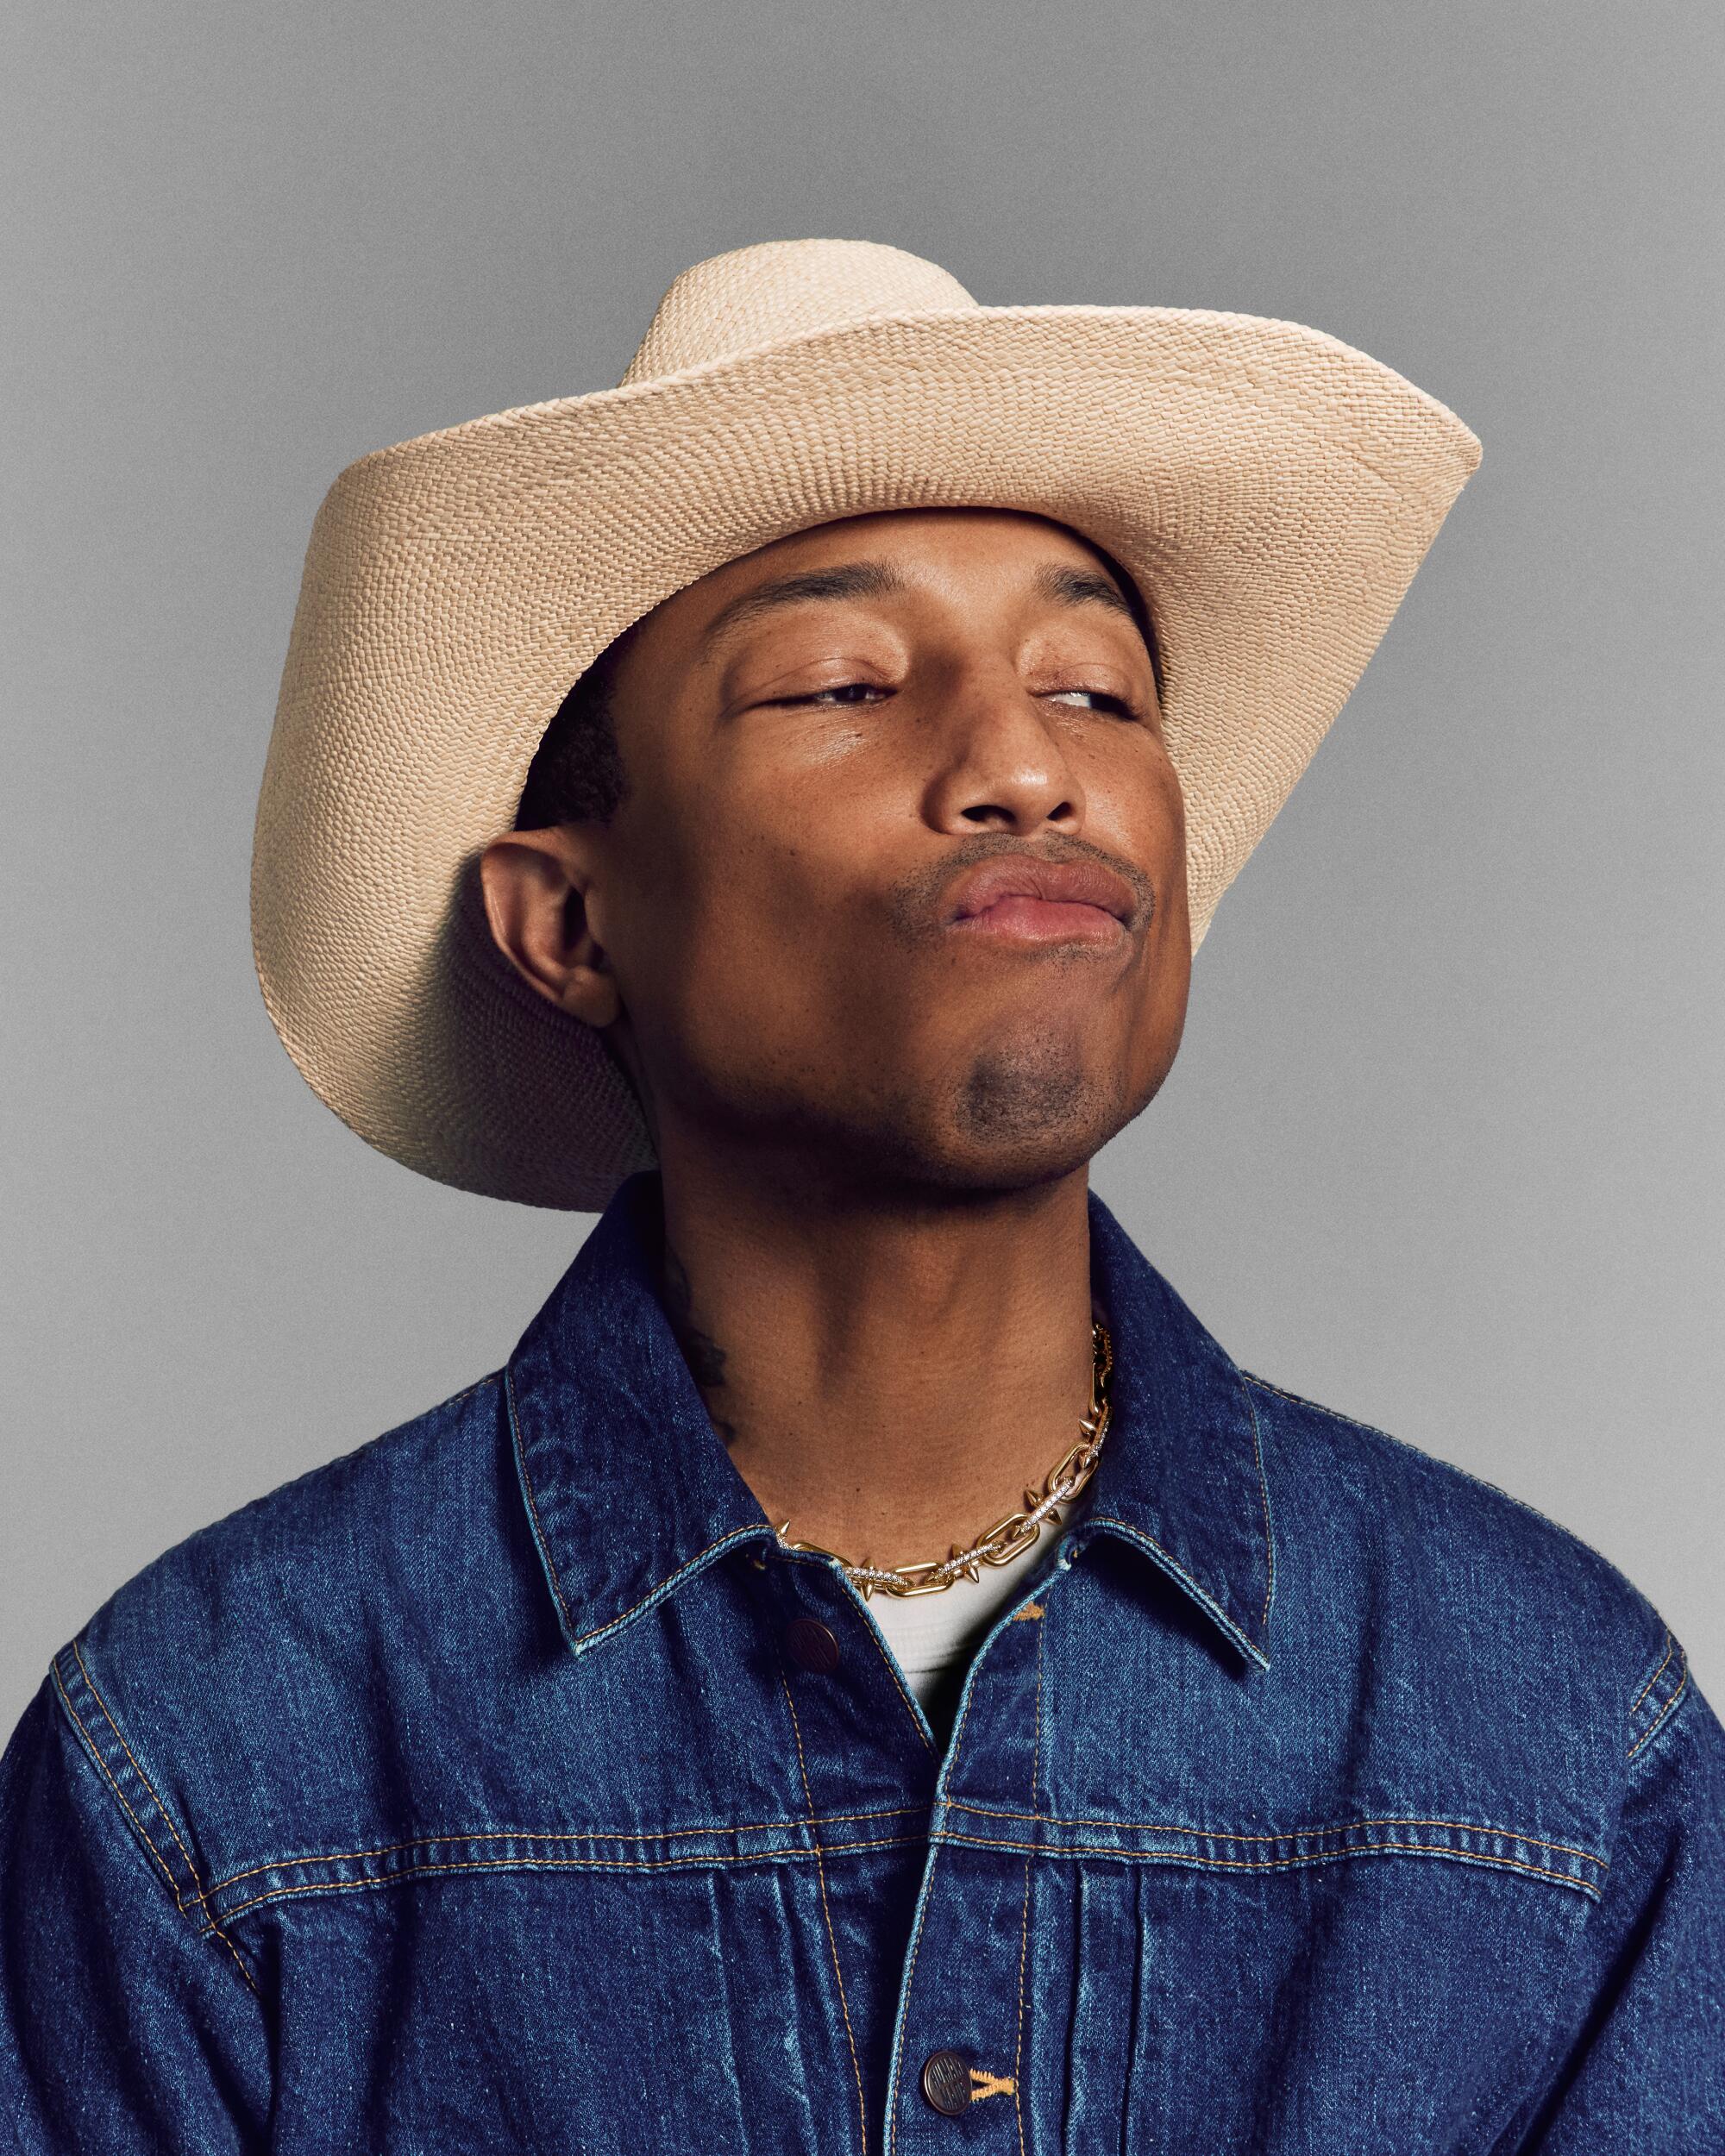 Pharrell Williams in cowboy hat and denim shirt, pursing his lips